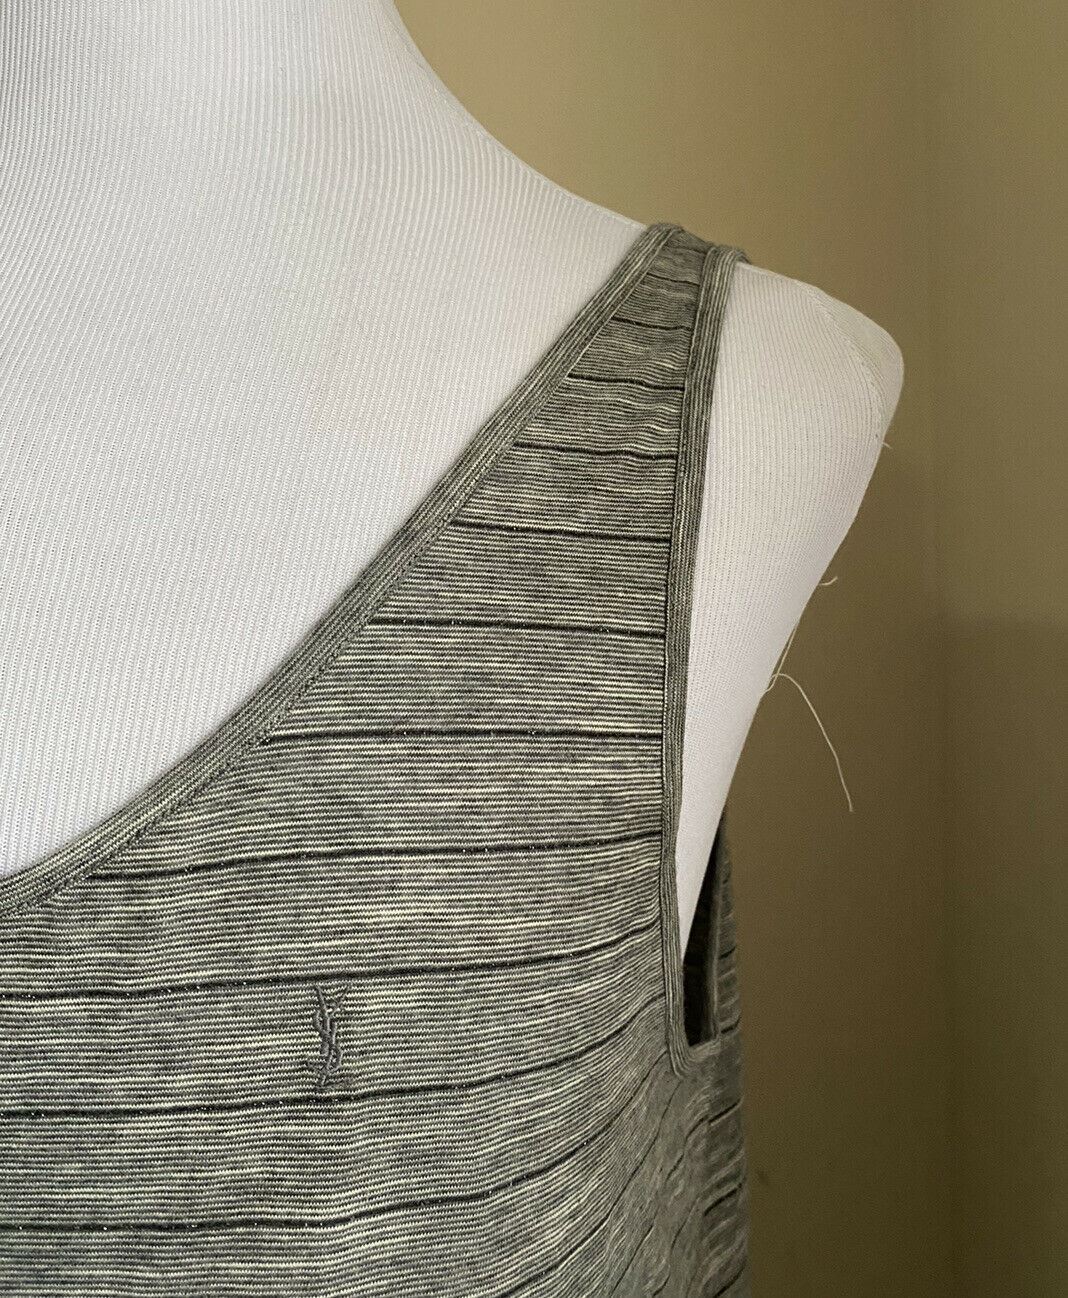 Neu mit Etikett: Saint Laurent YSL bedrucktes ärmelloses Herren-T-Shirt, Grau, Größe XL, Italien